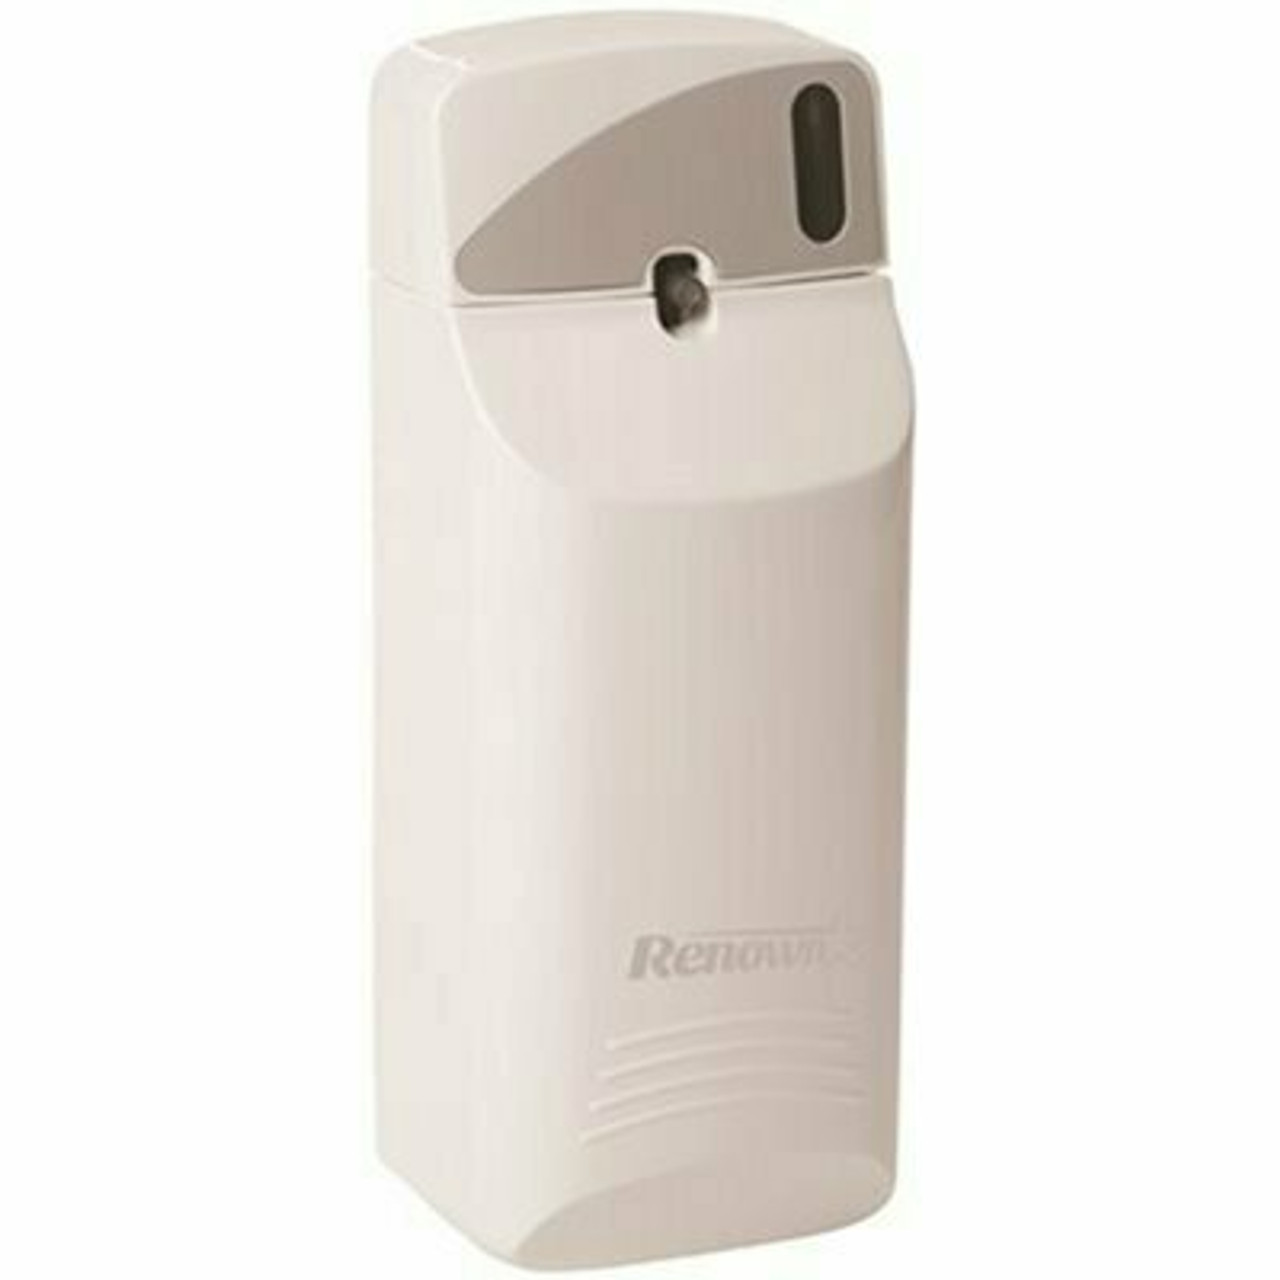 Renown Economizer Air Freshener Dispenser In White